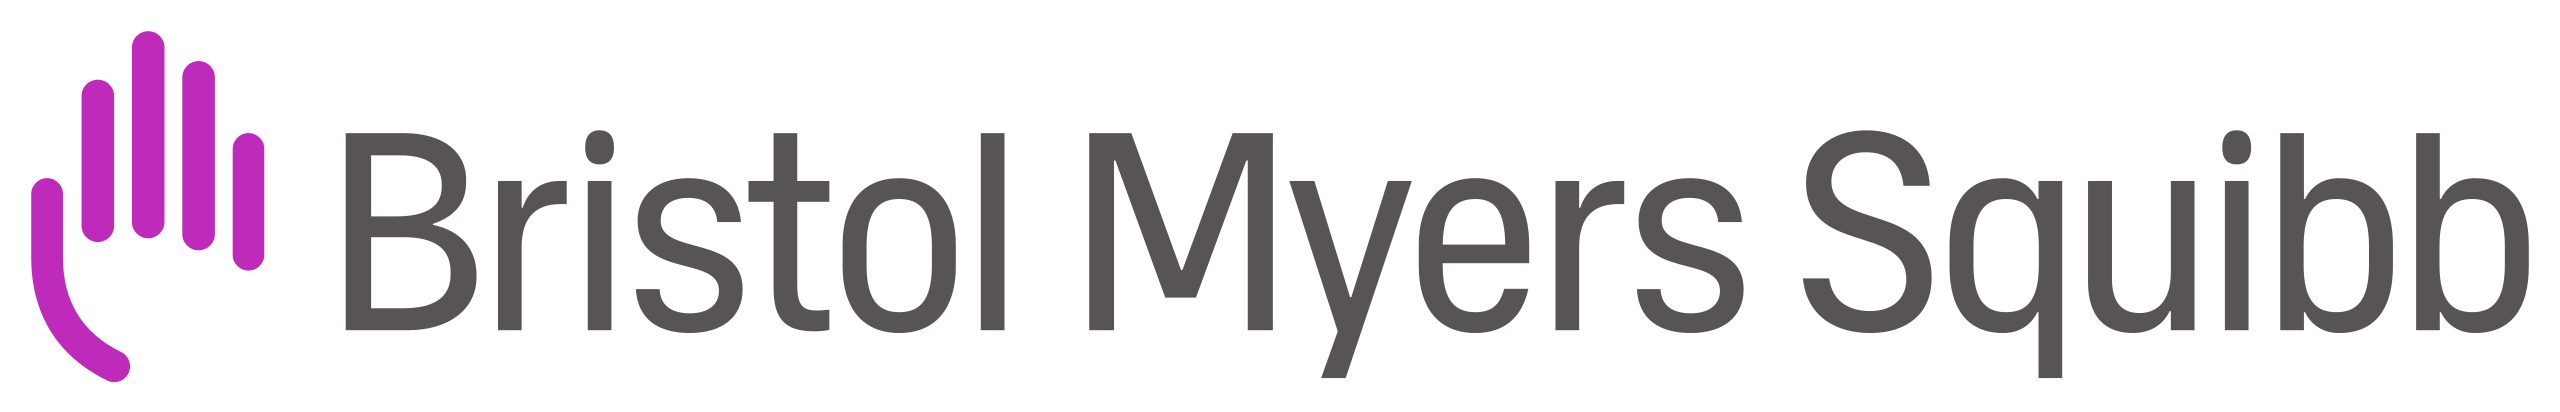 Bristol-Myers_Squibb_logo_(2020).svg__0.png